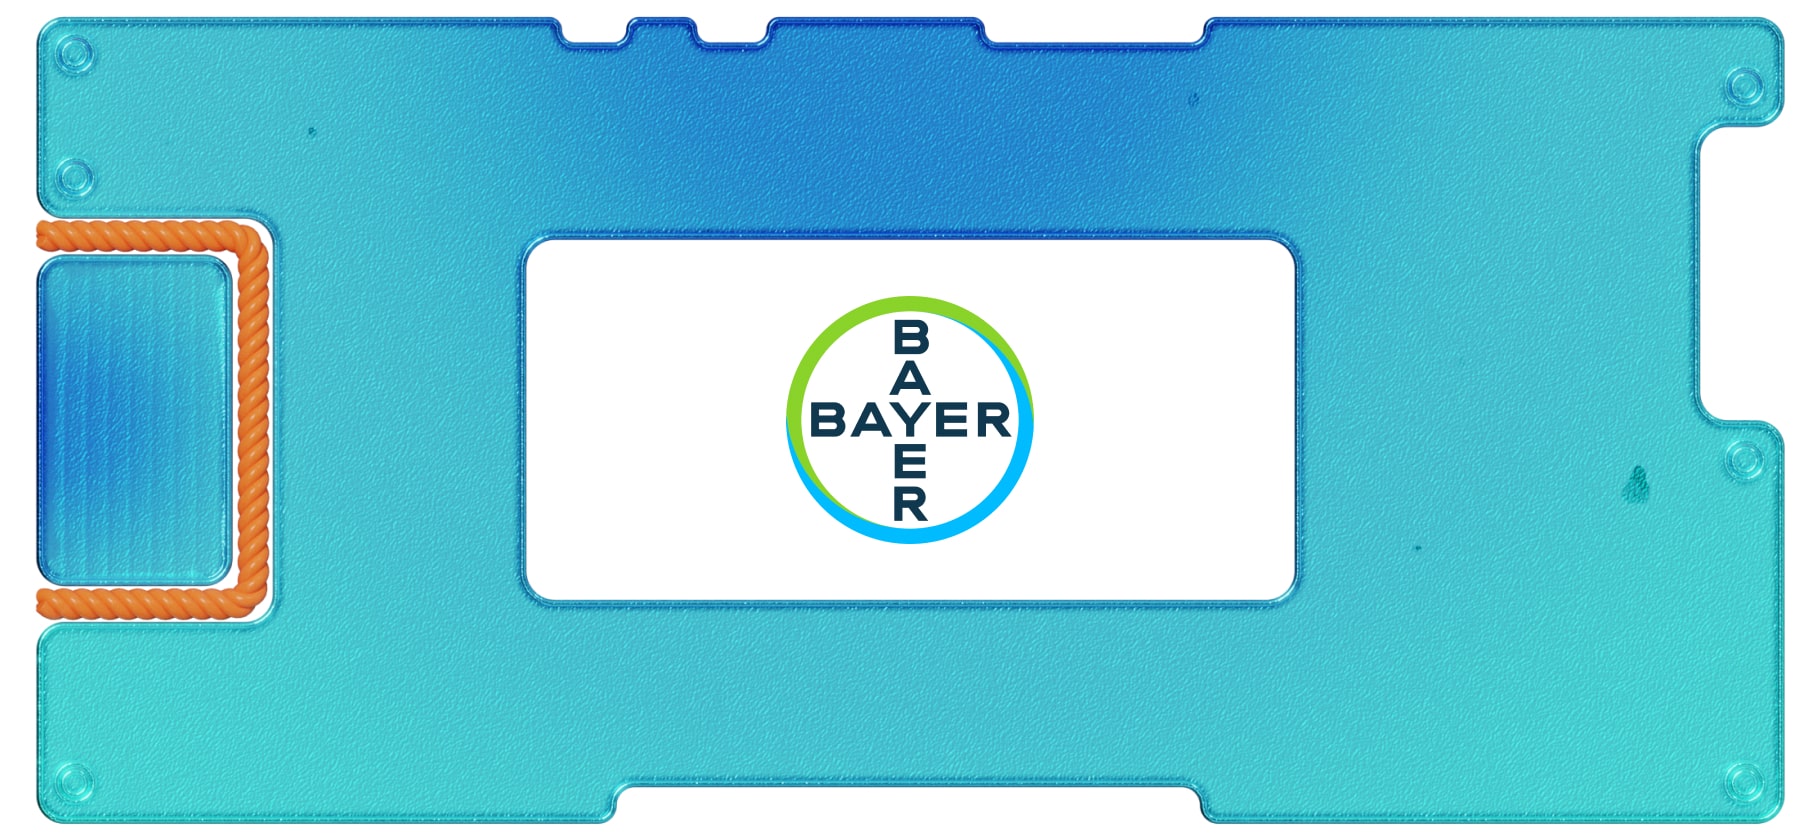 Обзор Bayer: пестициды и лекарства